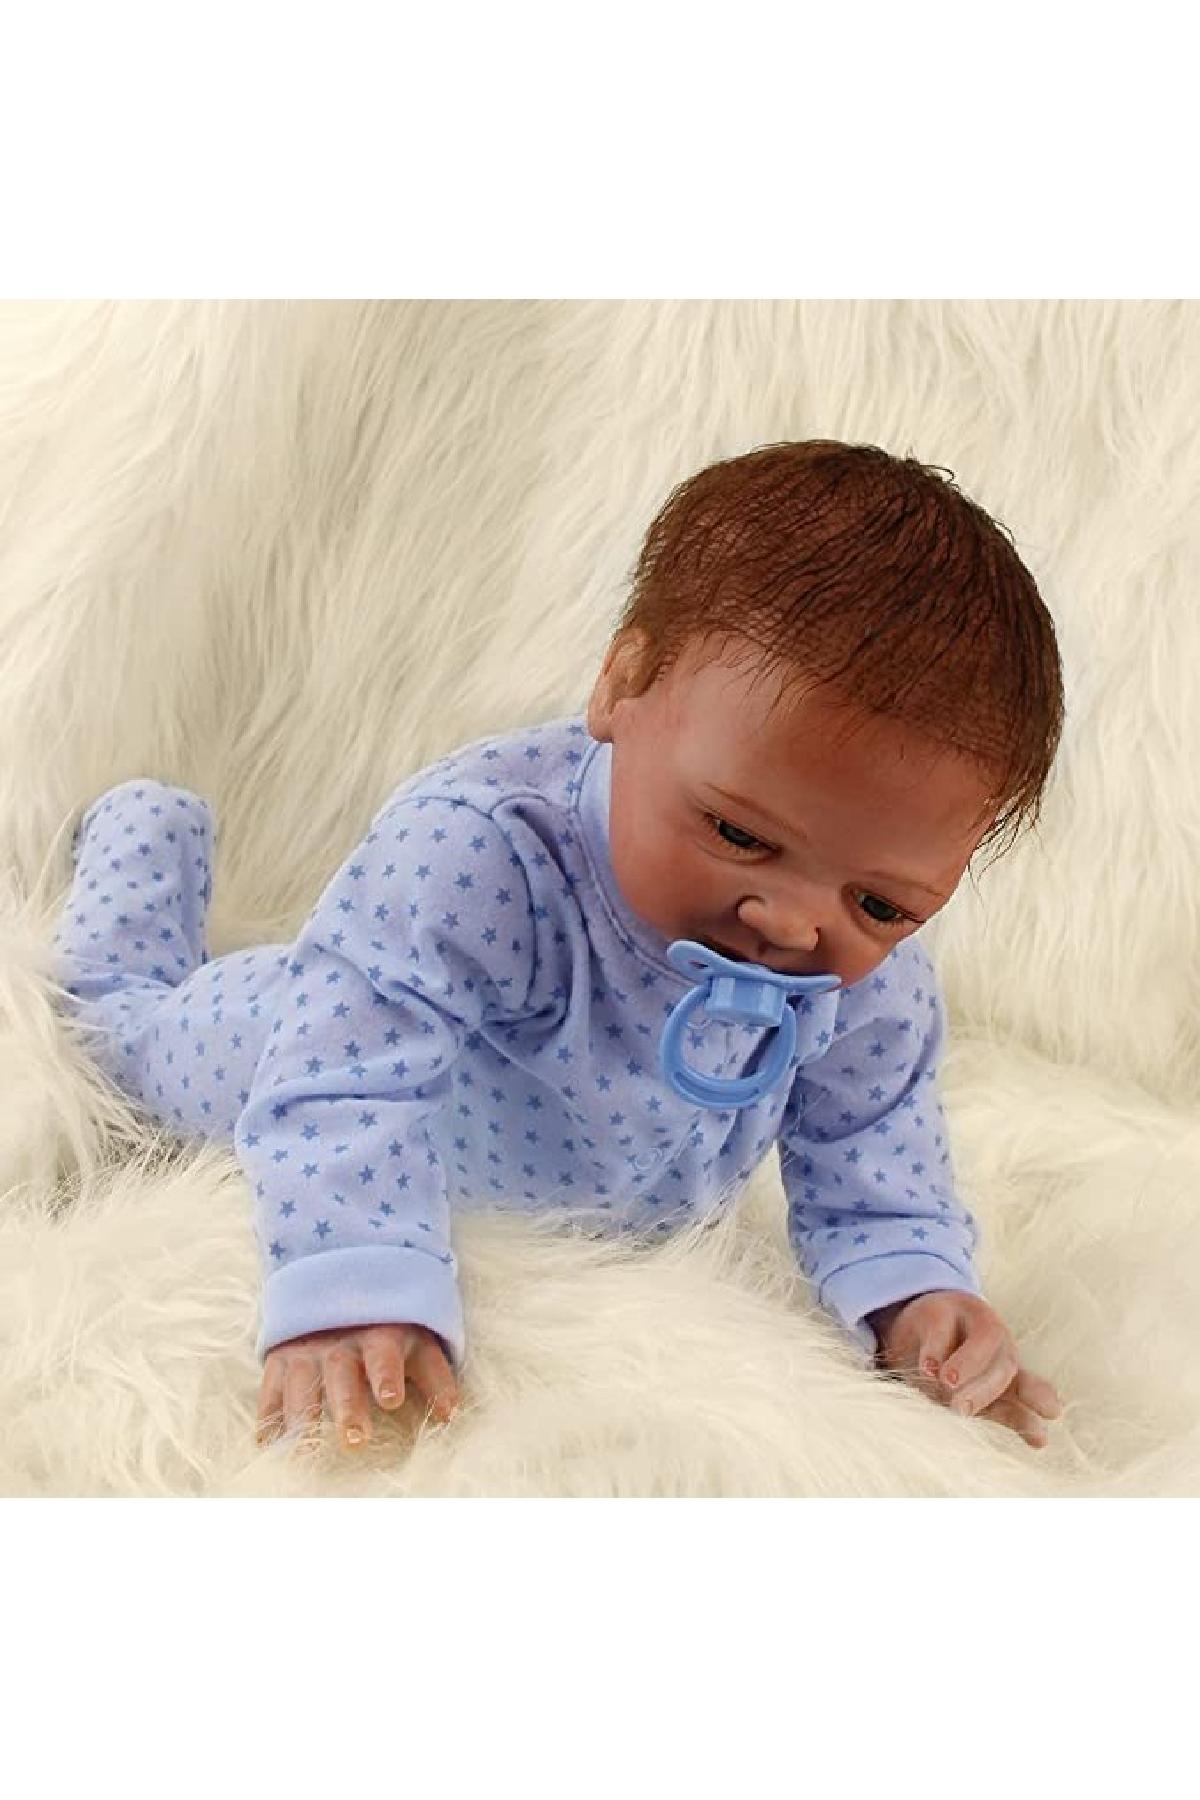 عروسک سیلیکونی واقعی نوزاد پسر کد.1026